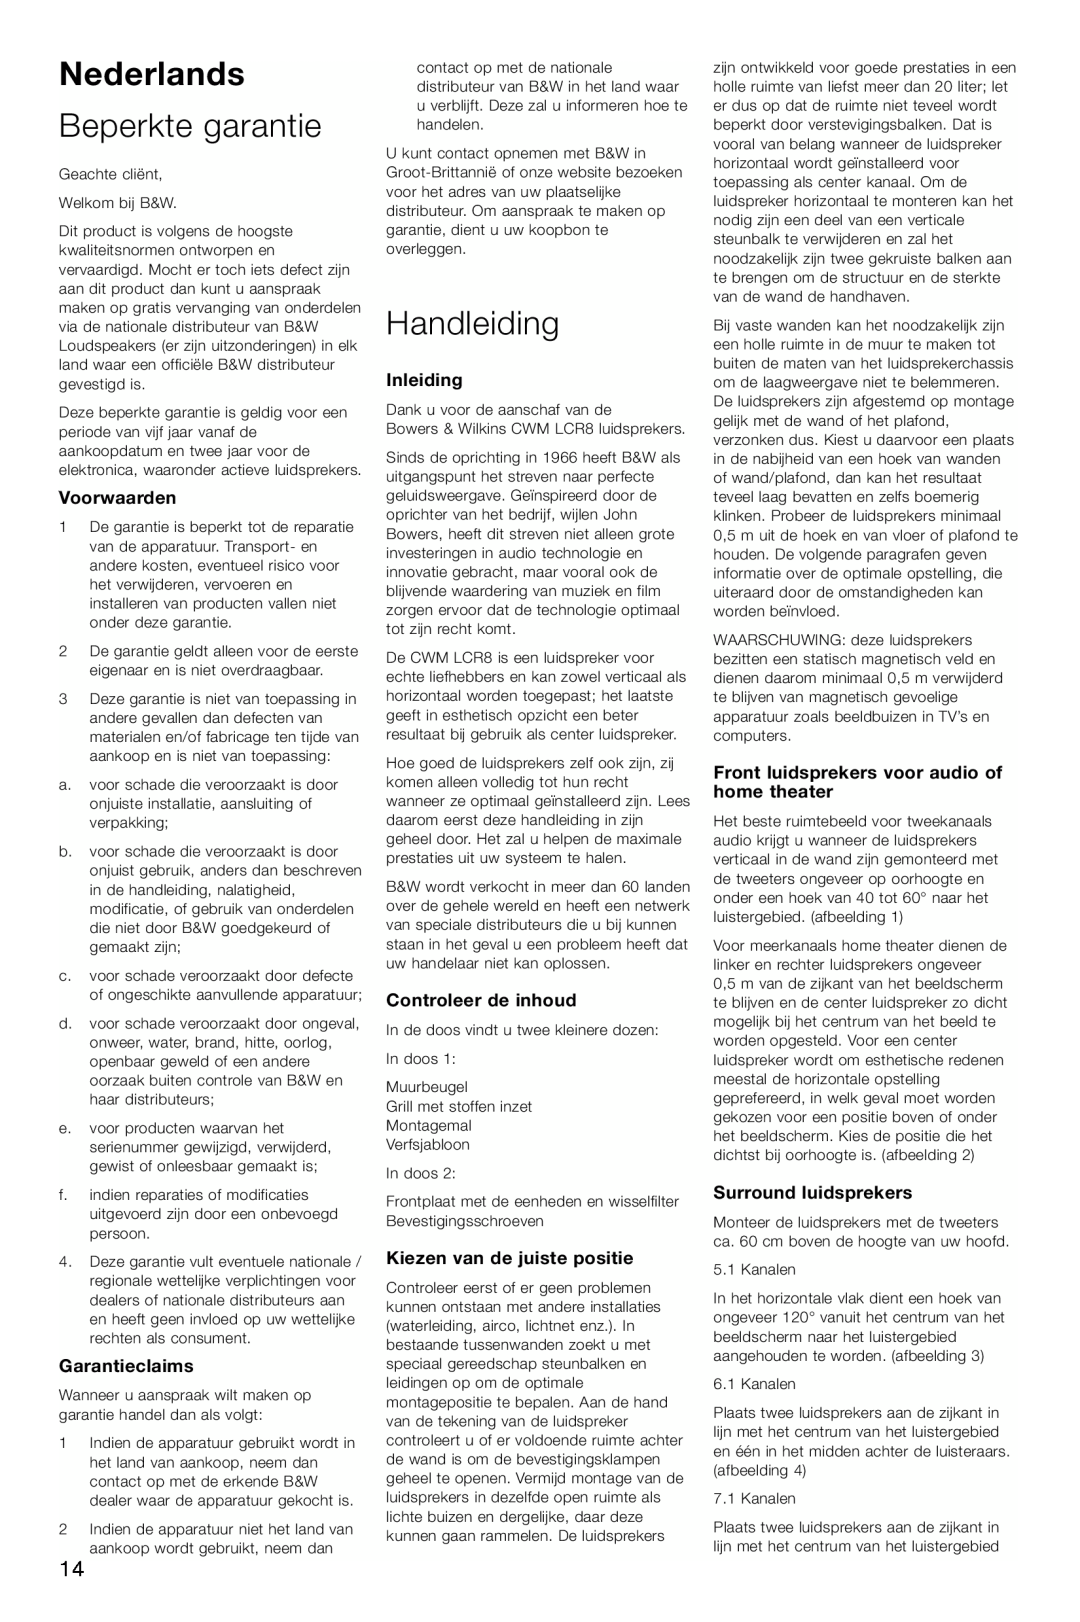 Bowers & Wilkins CWM-LCR8 owner manual Nederlands, Beperkte garantie, Handleiding, Voorwaarden, Garantieclaims, Inleiding 